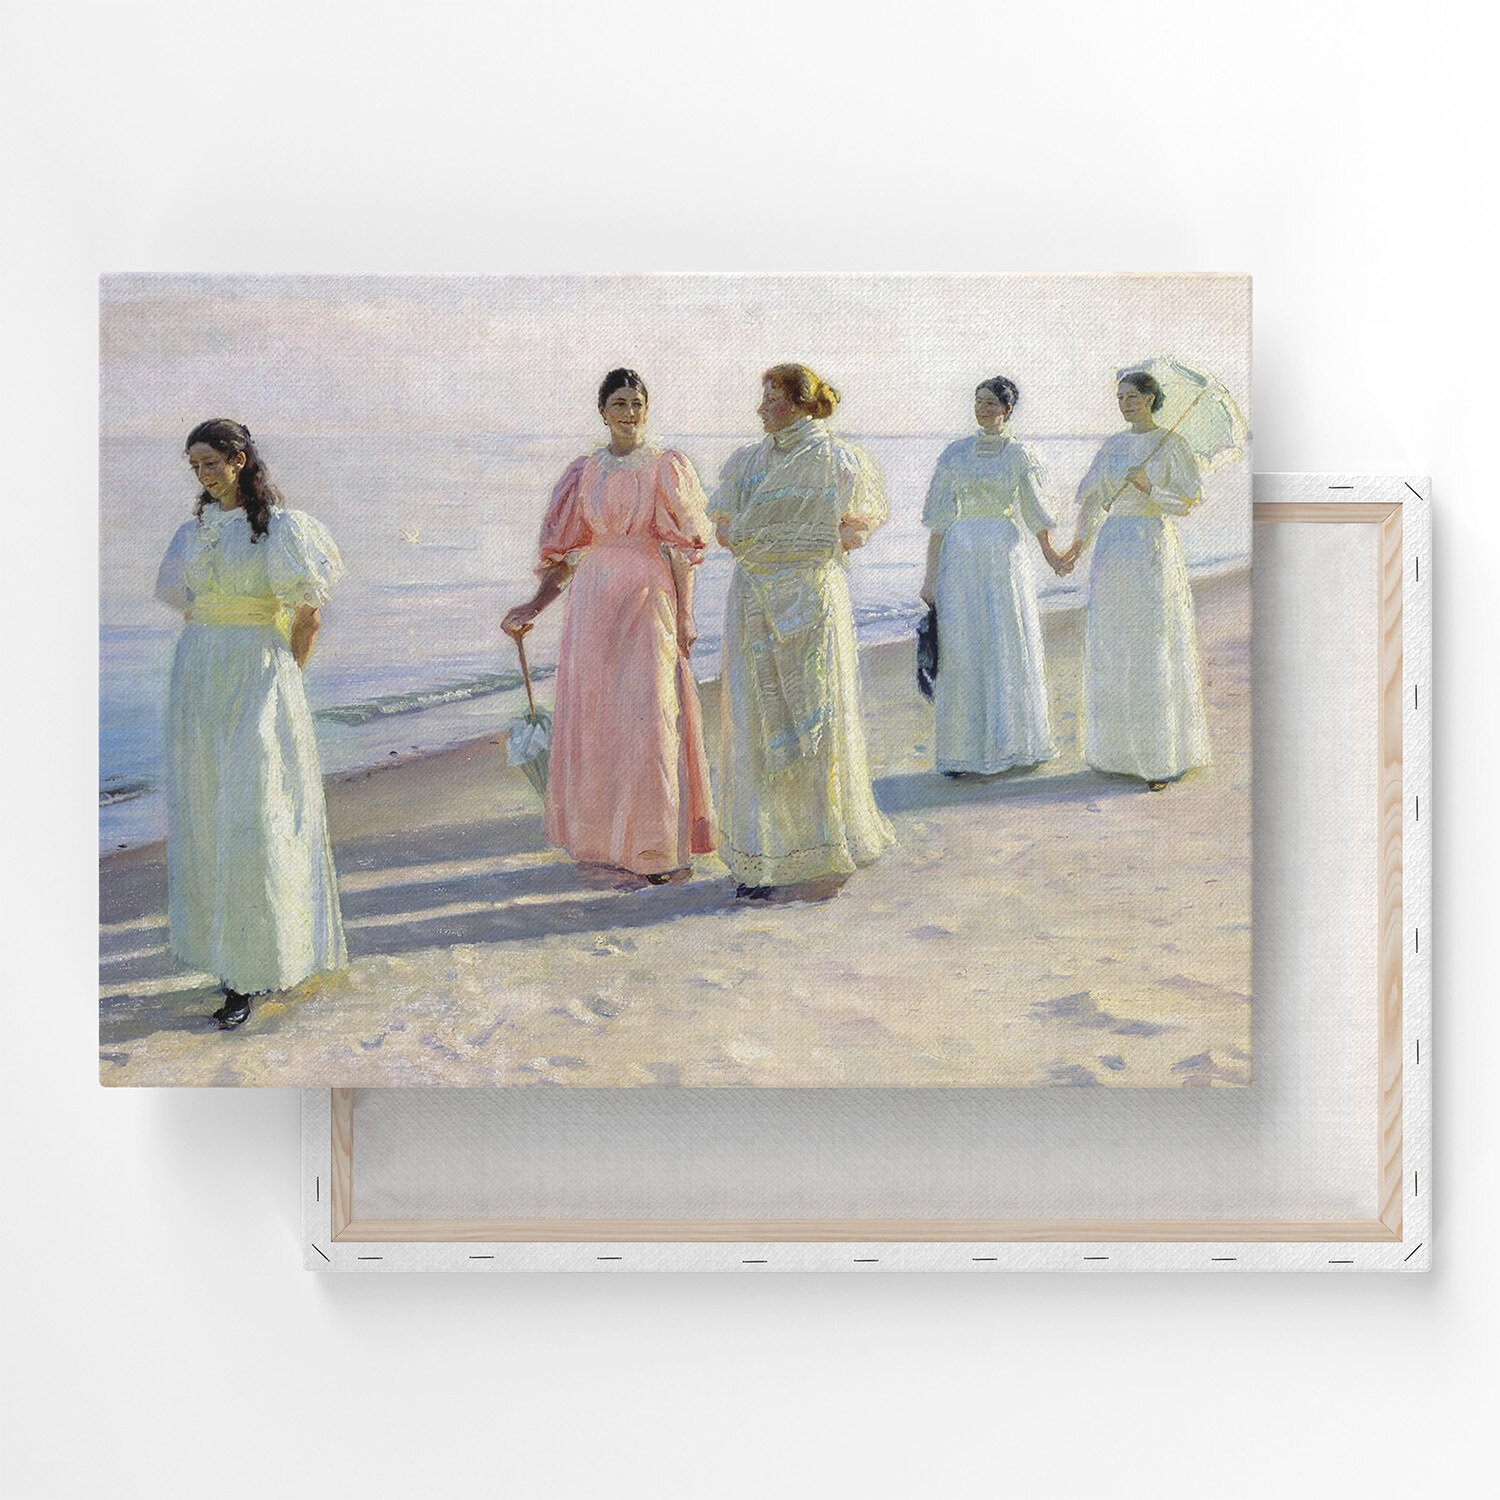 Картина на холсте, репродукция / Микаэль Анкер - A stroll on the beach / Размер 30 x 40 см